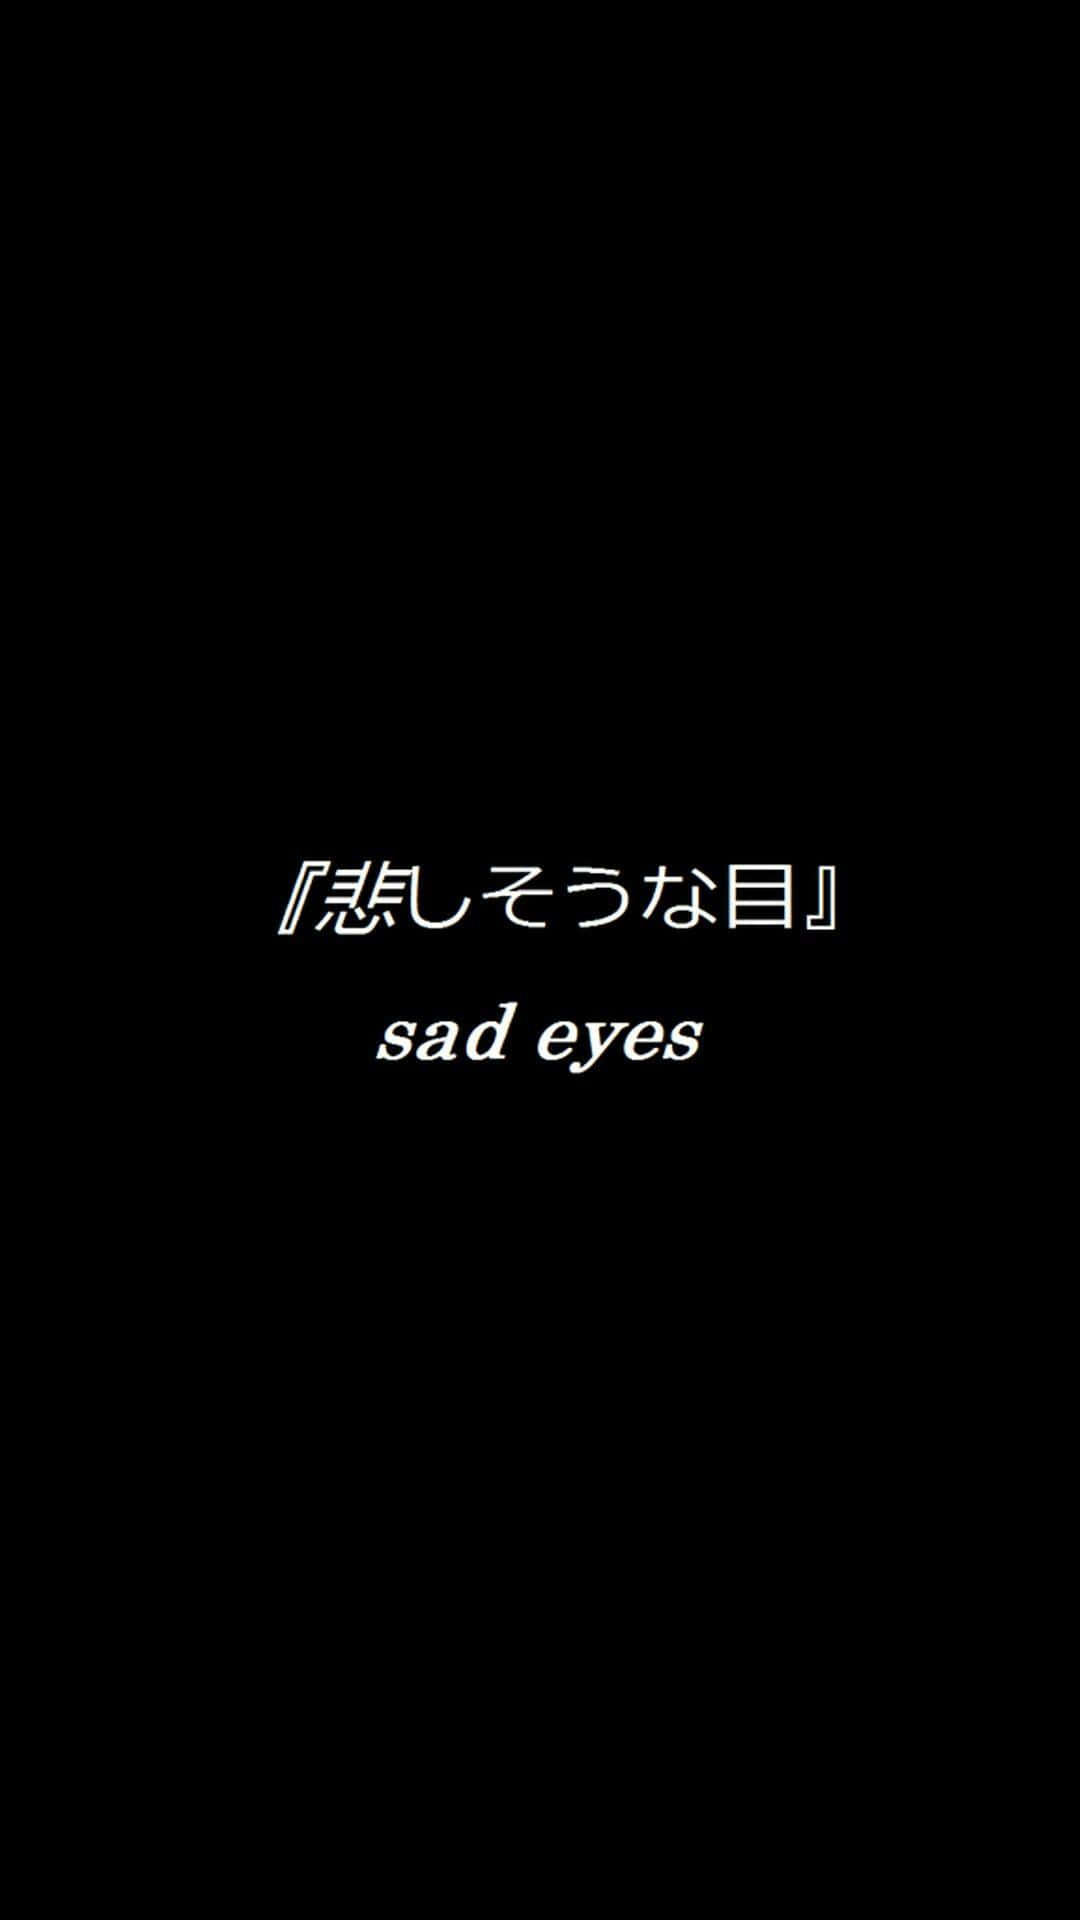 Sad Eyes Japanese Aesthetic Black Wallpaper